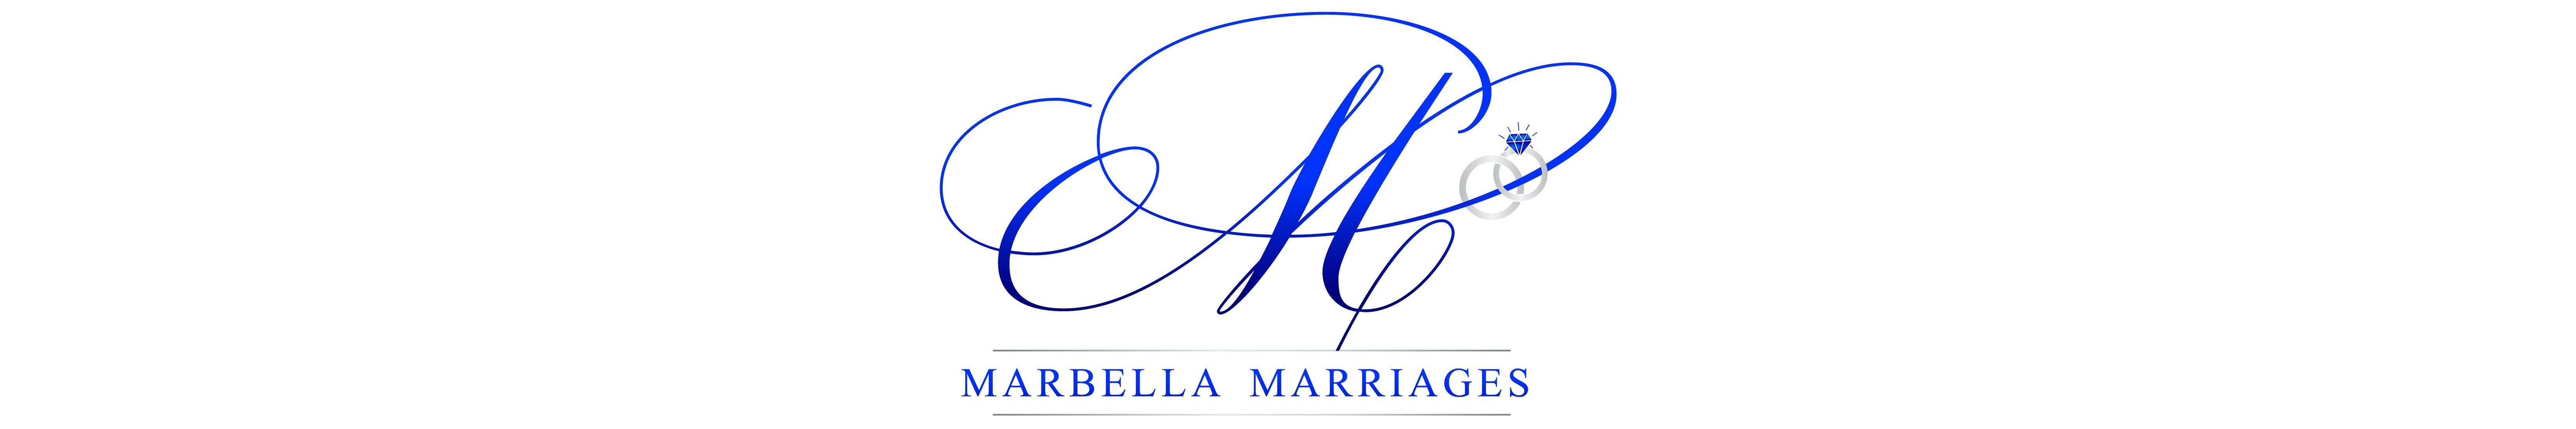 Marbella Marriages - Wedding Planner